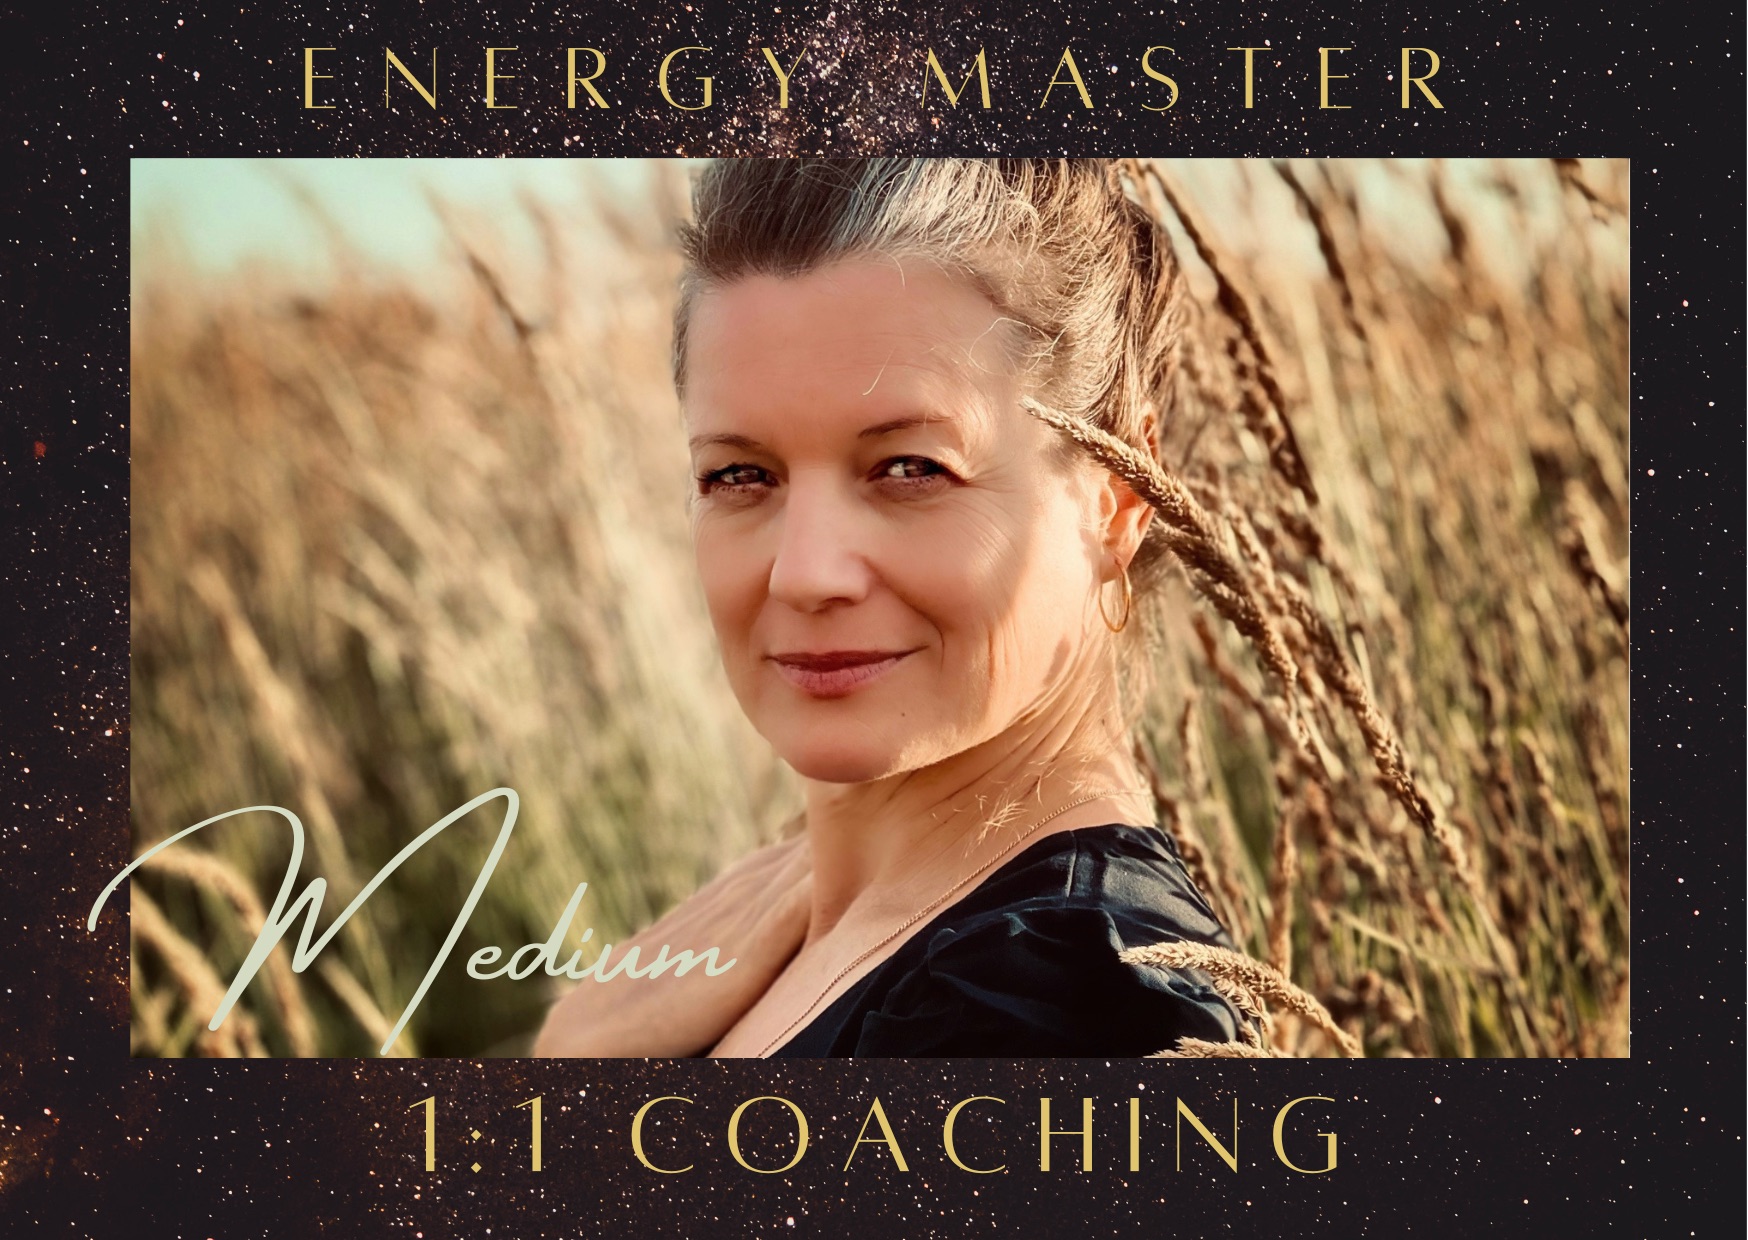 Energy Master Medium 1:1 Coaching Eva Maria Klinger